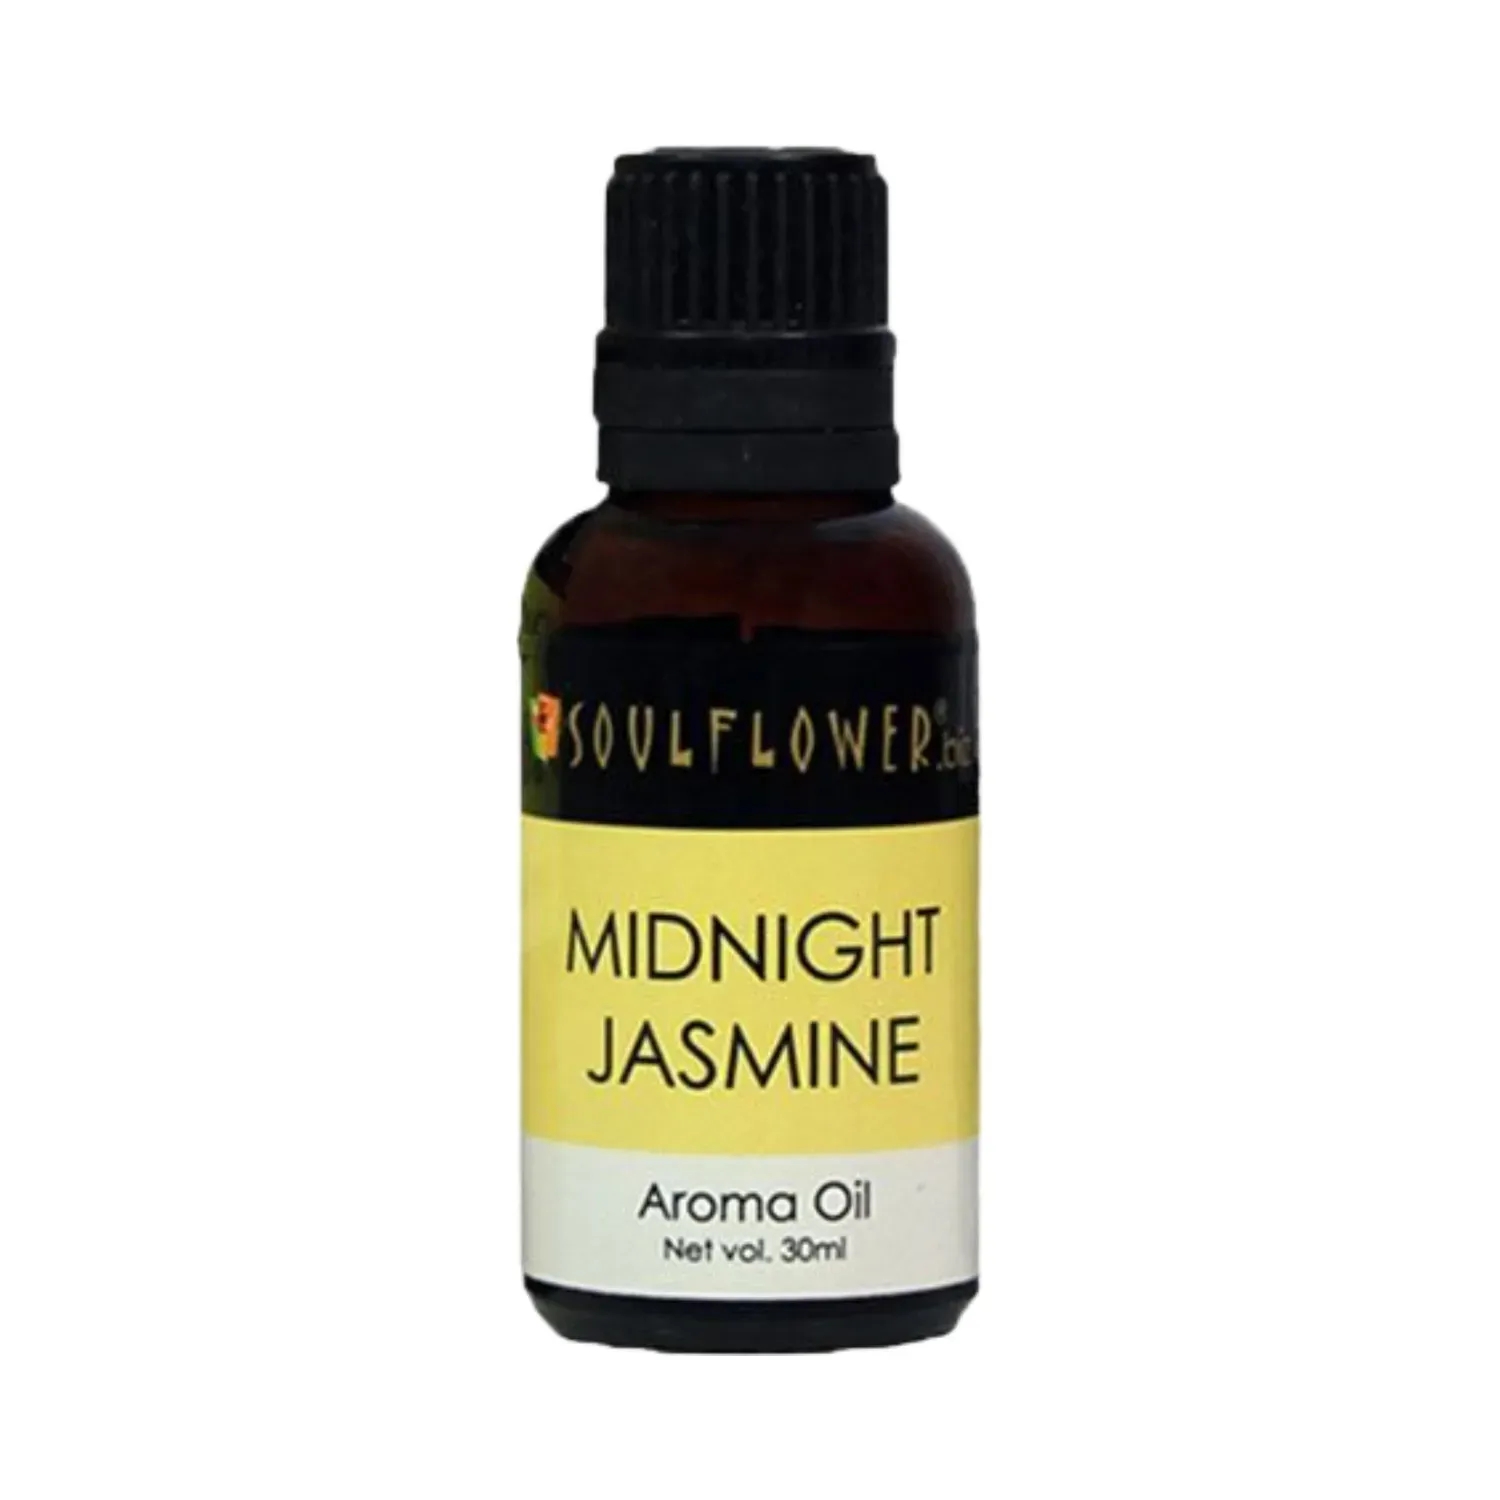 Soulflower | Soulflower Midnight Jasmine Aroma Oil - (30ml)